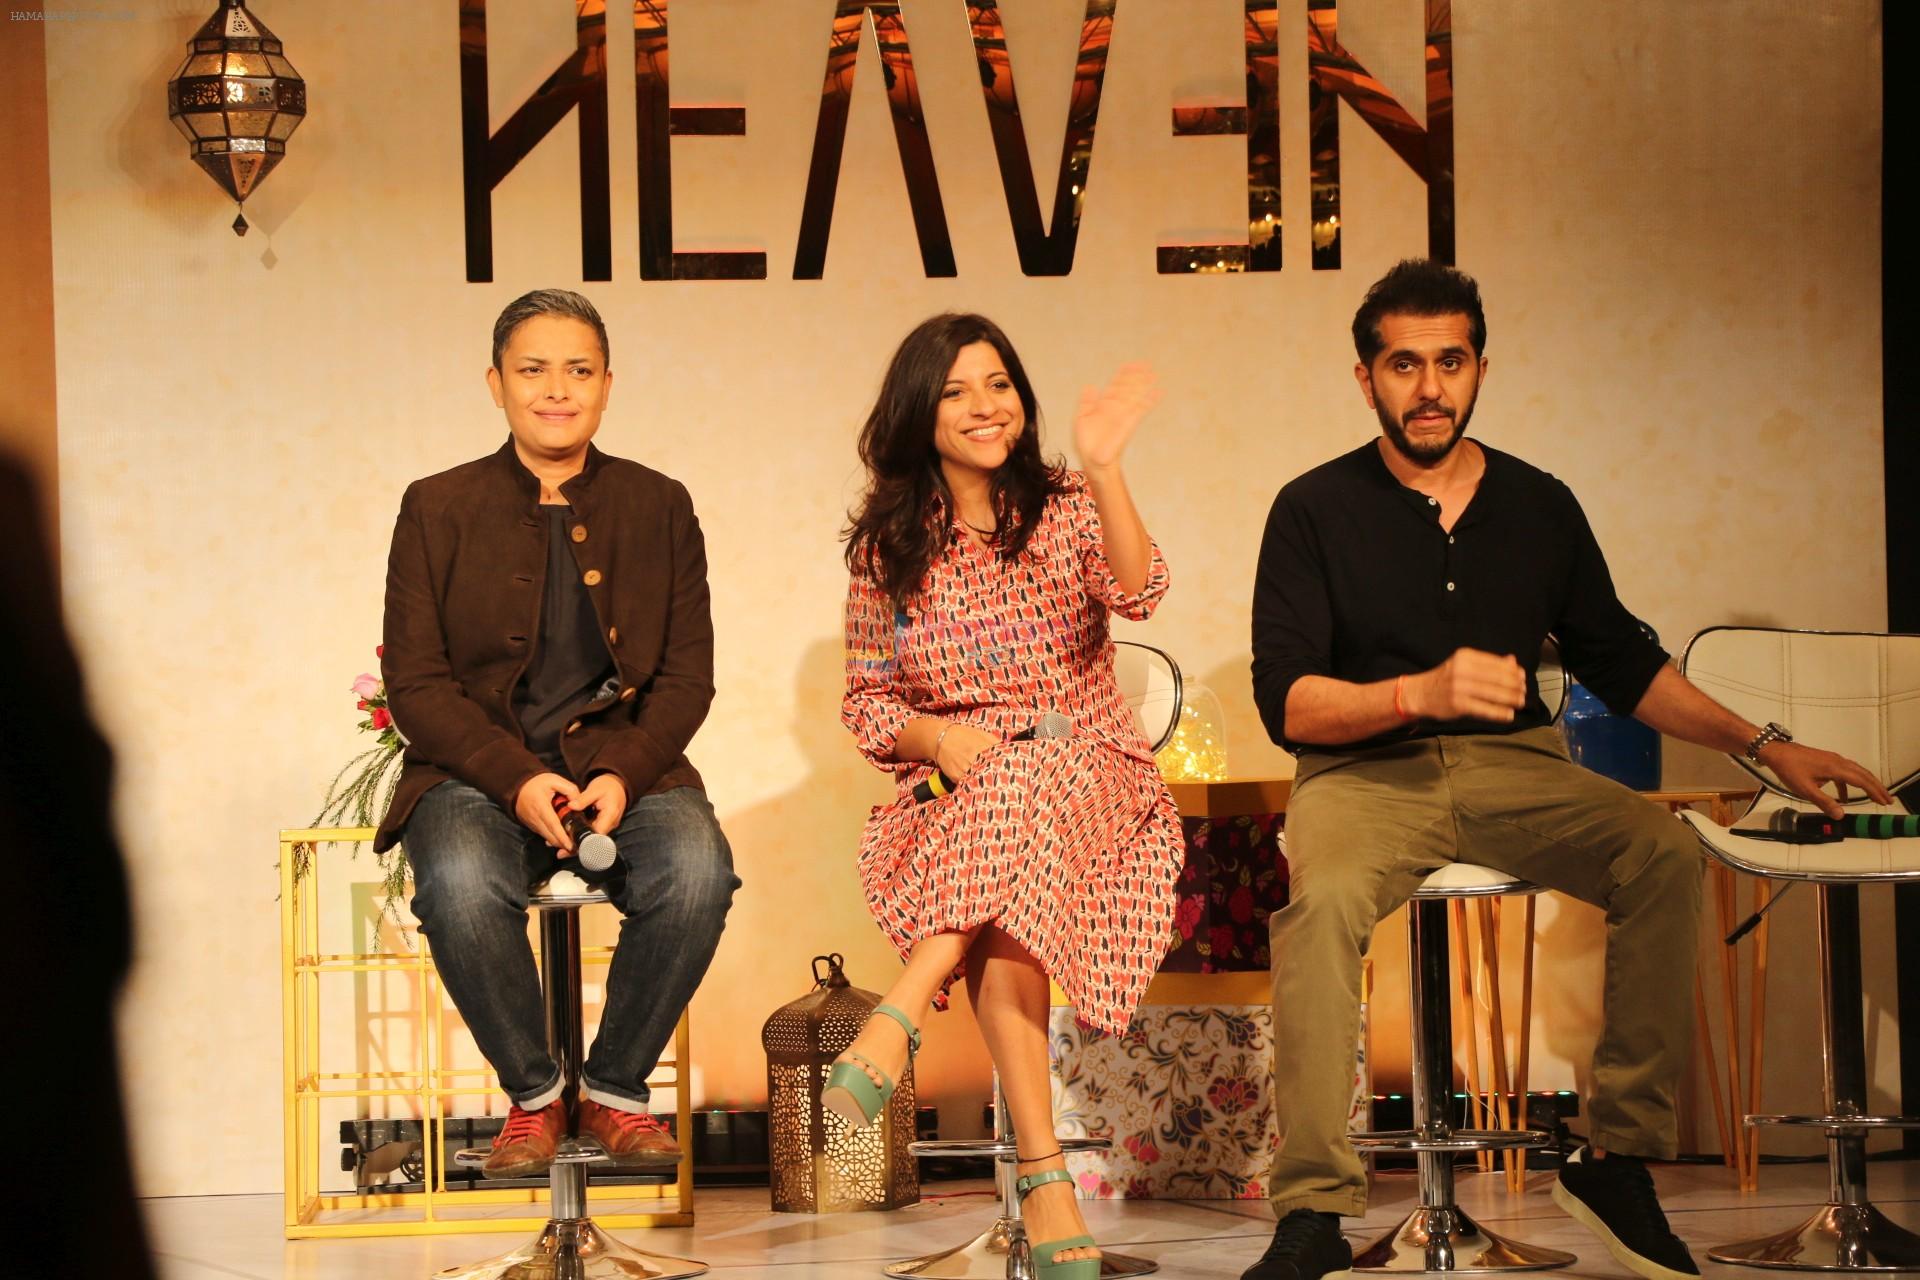 Zoya Akhtar, Ritesh Sidhwani, Reema Kagti, Alankrita Shrivastava at the Launch of Amazon webseries Made in Heaven at jw marriott on 7th March 2019